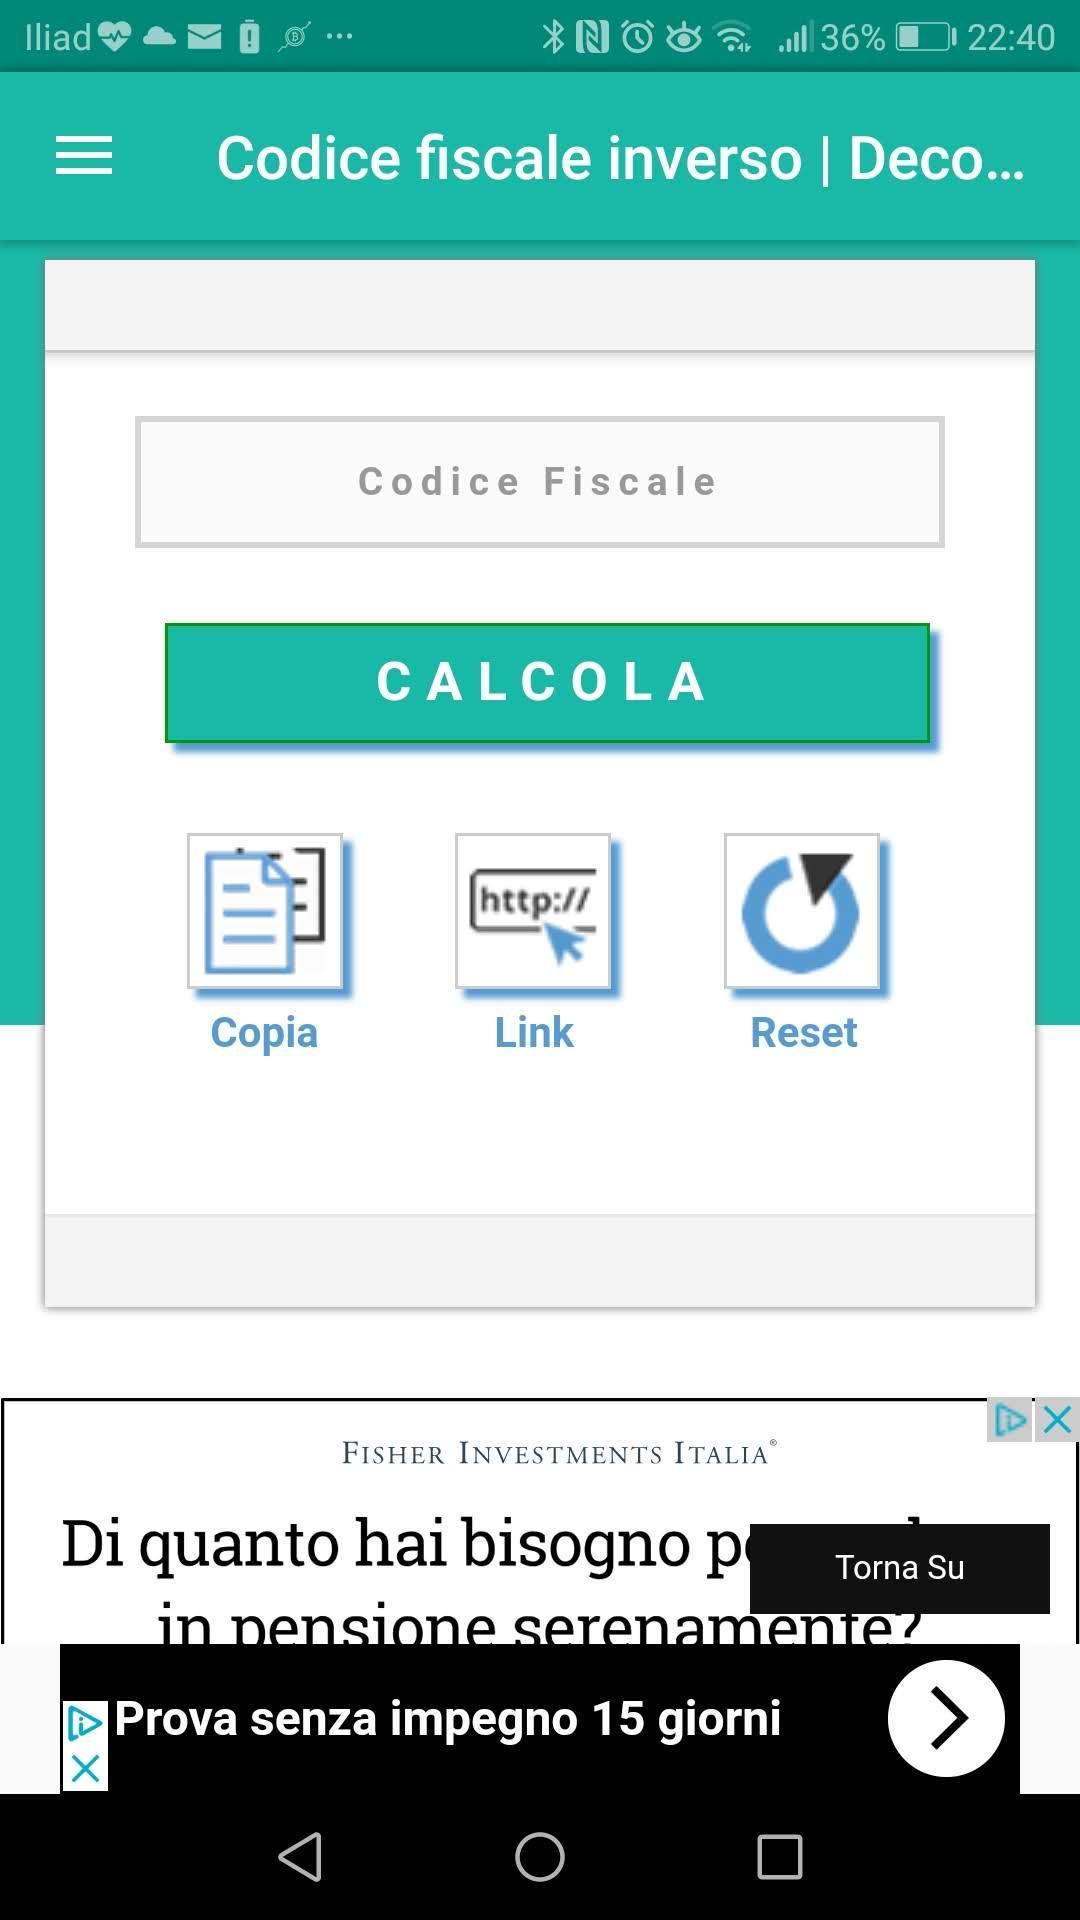 Codice fiscale inverso for Android - APK Download